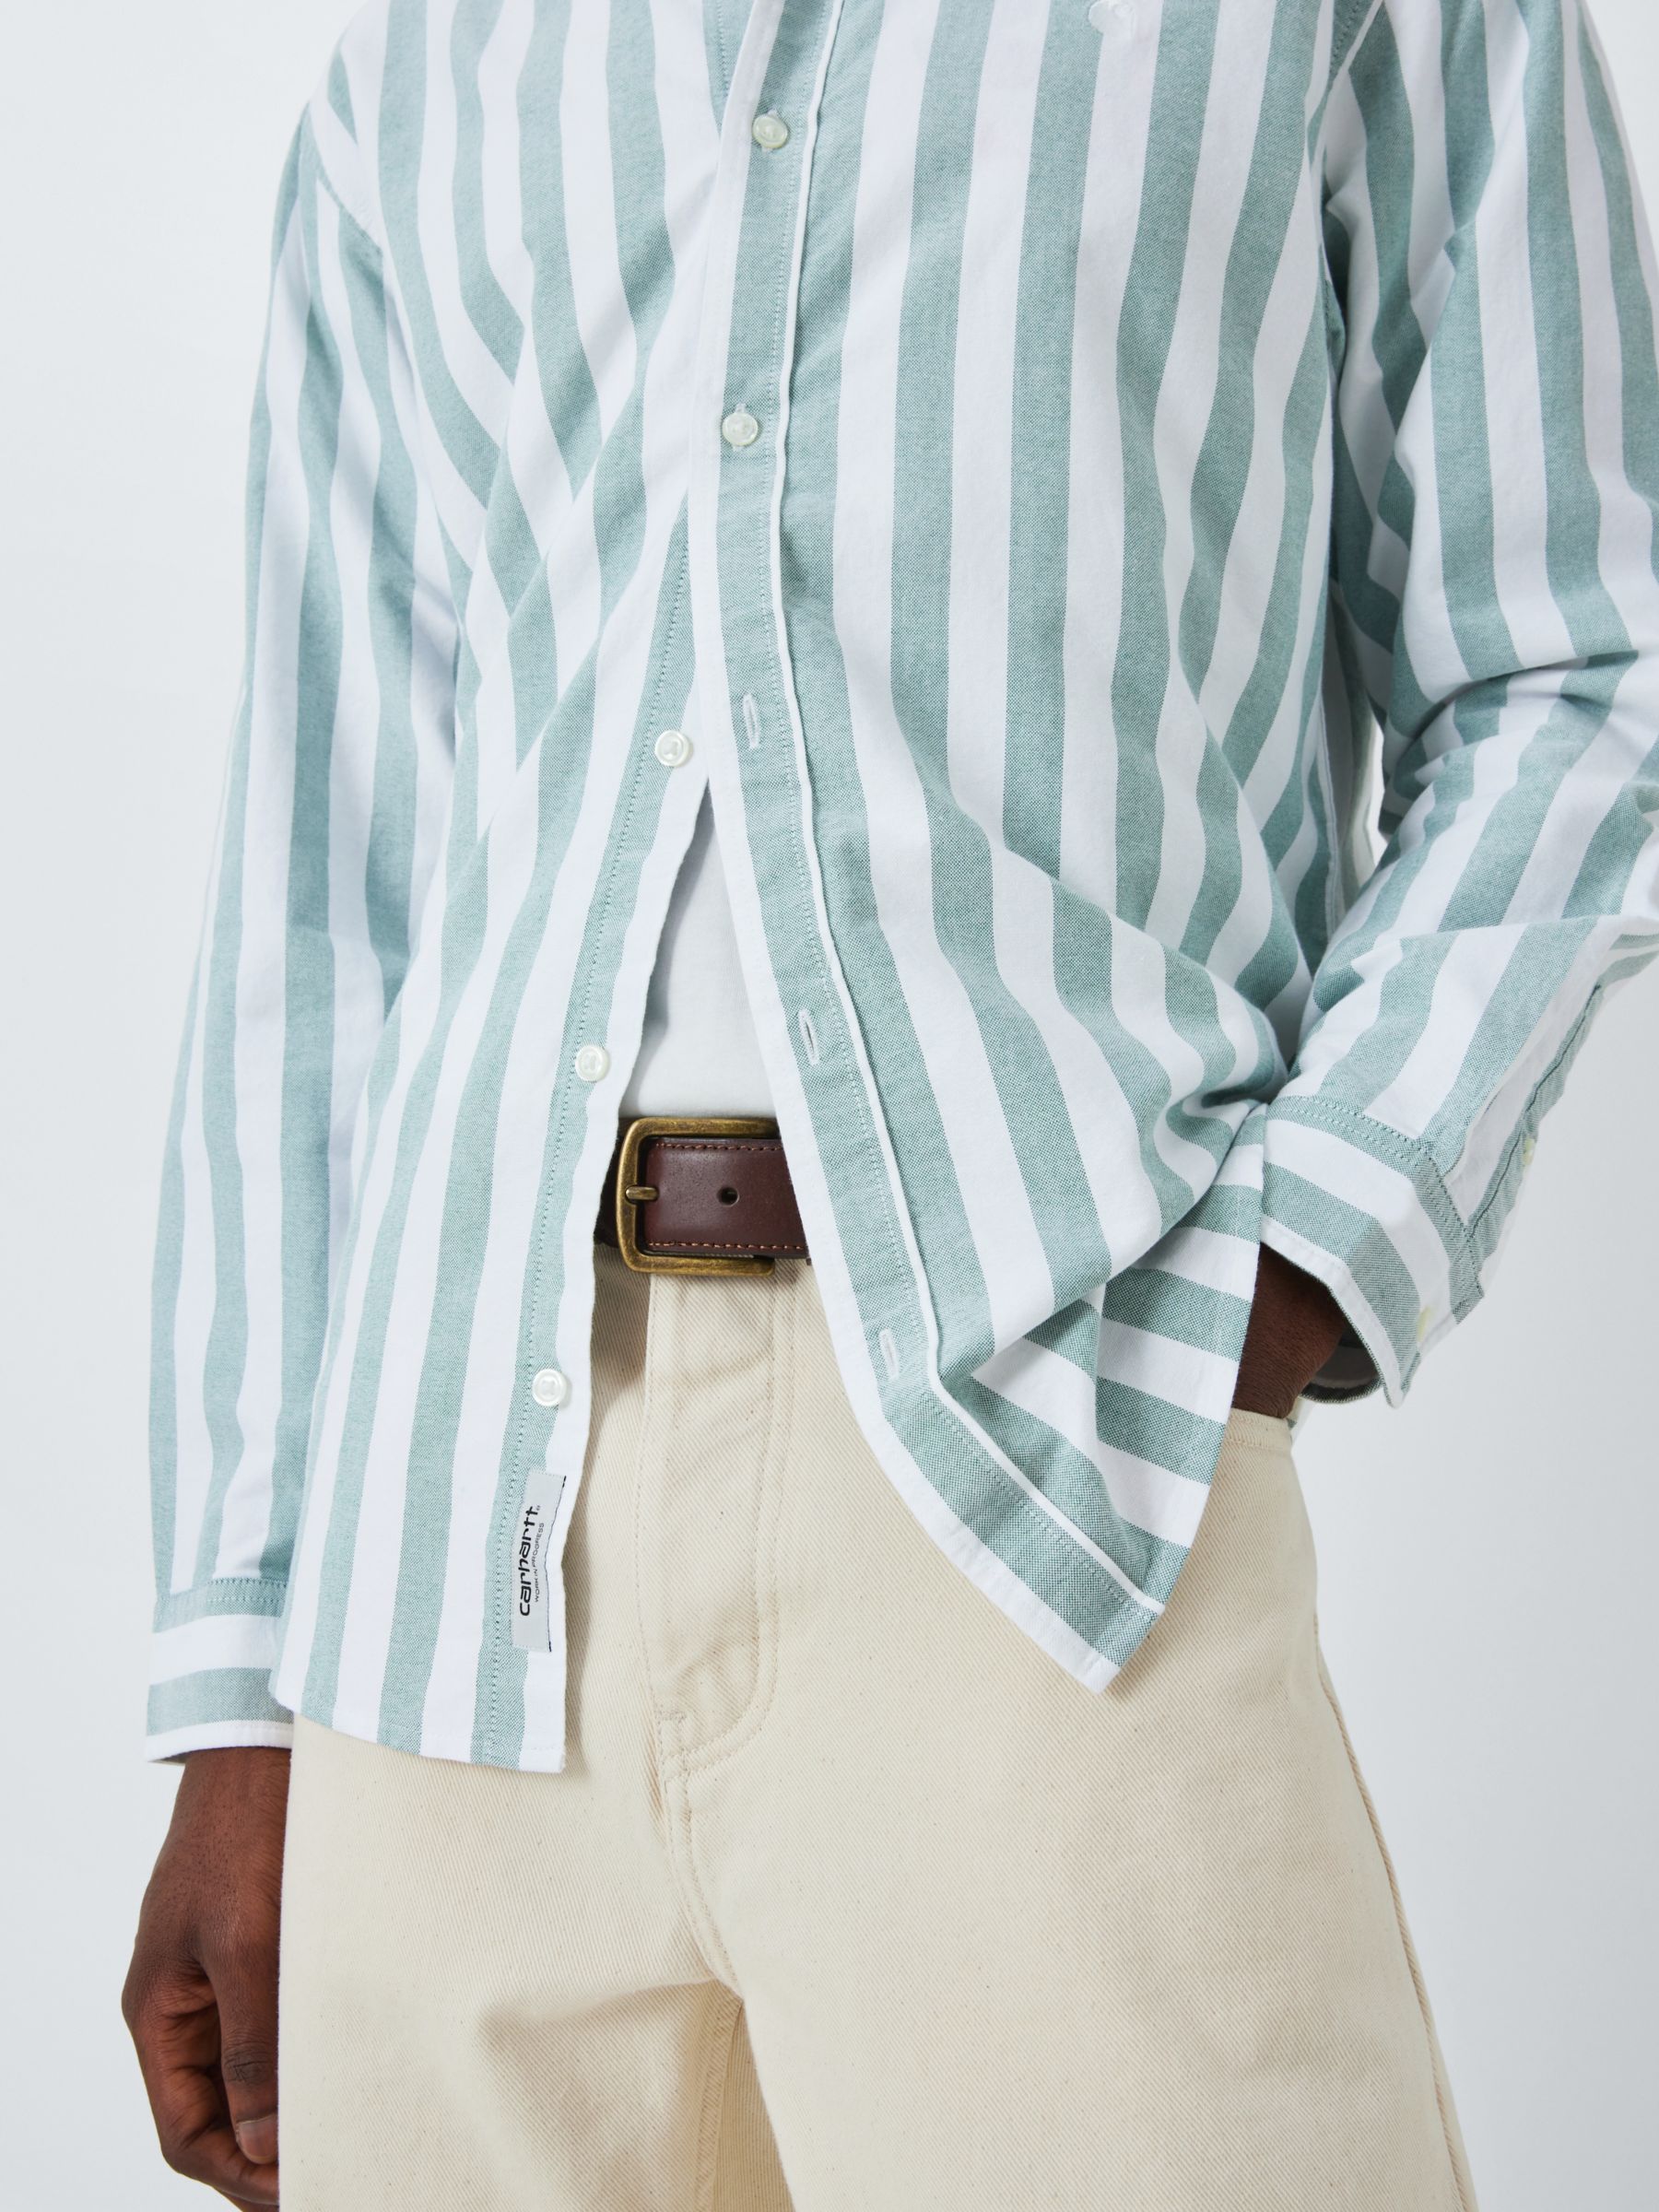 Carhartt WIP Long Sleeve Dillion Shirt, White/Grey, M